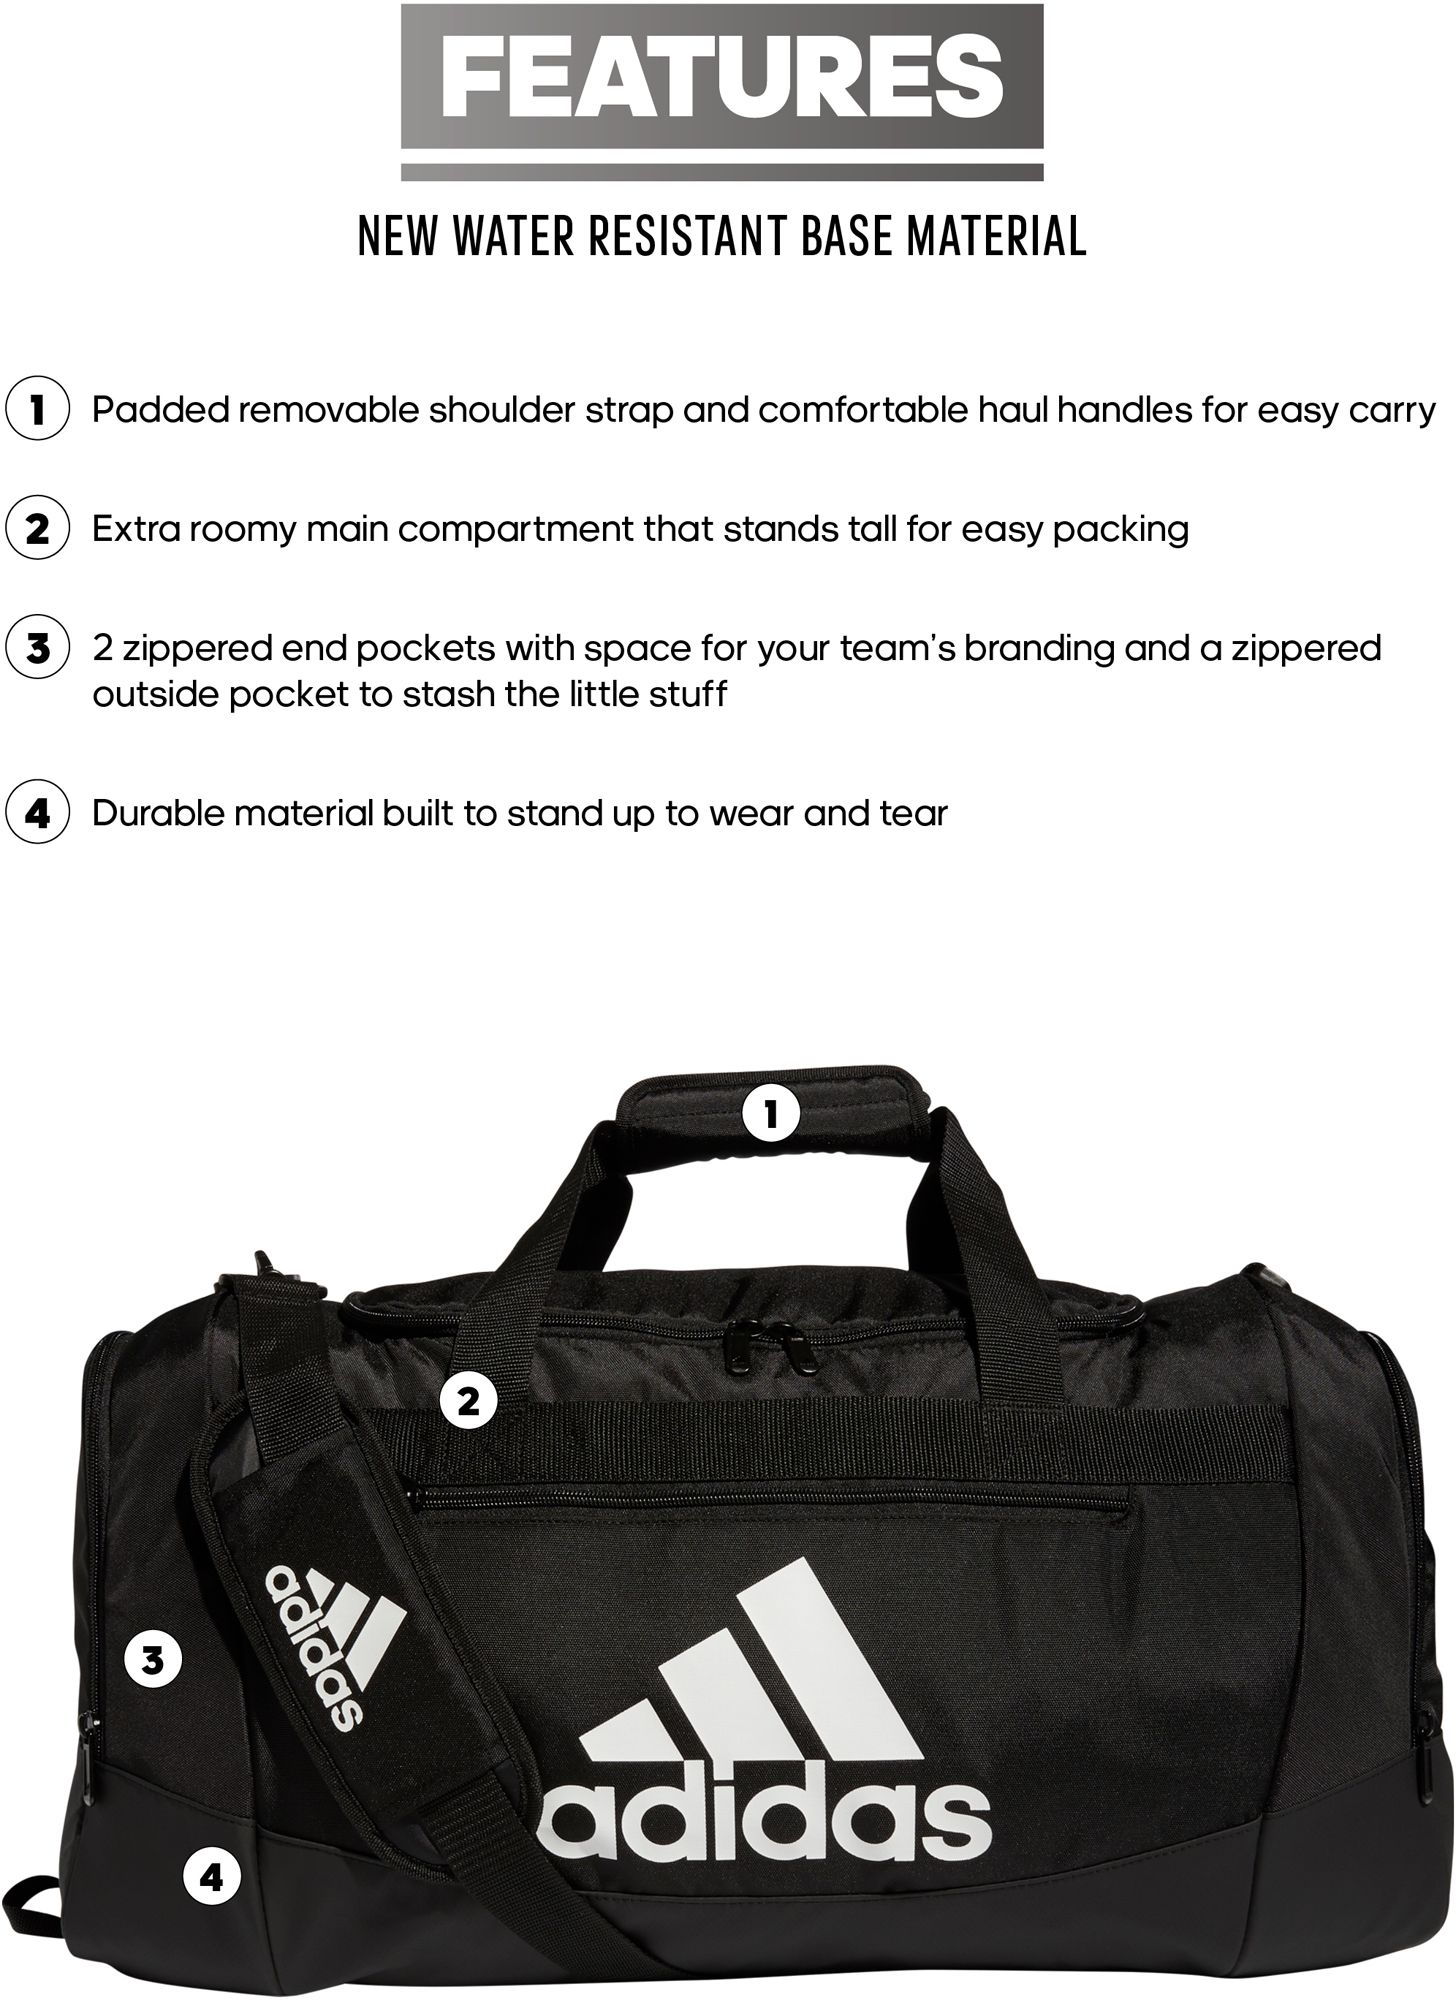 adidas Defender IV Medium Duffel Bag